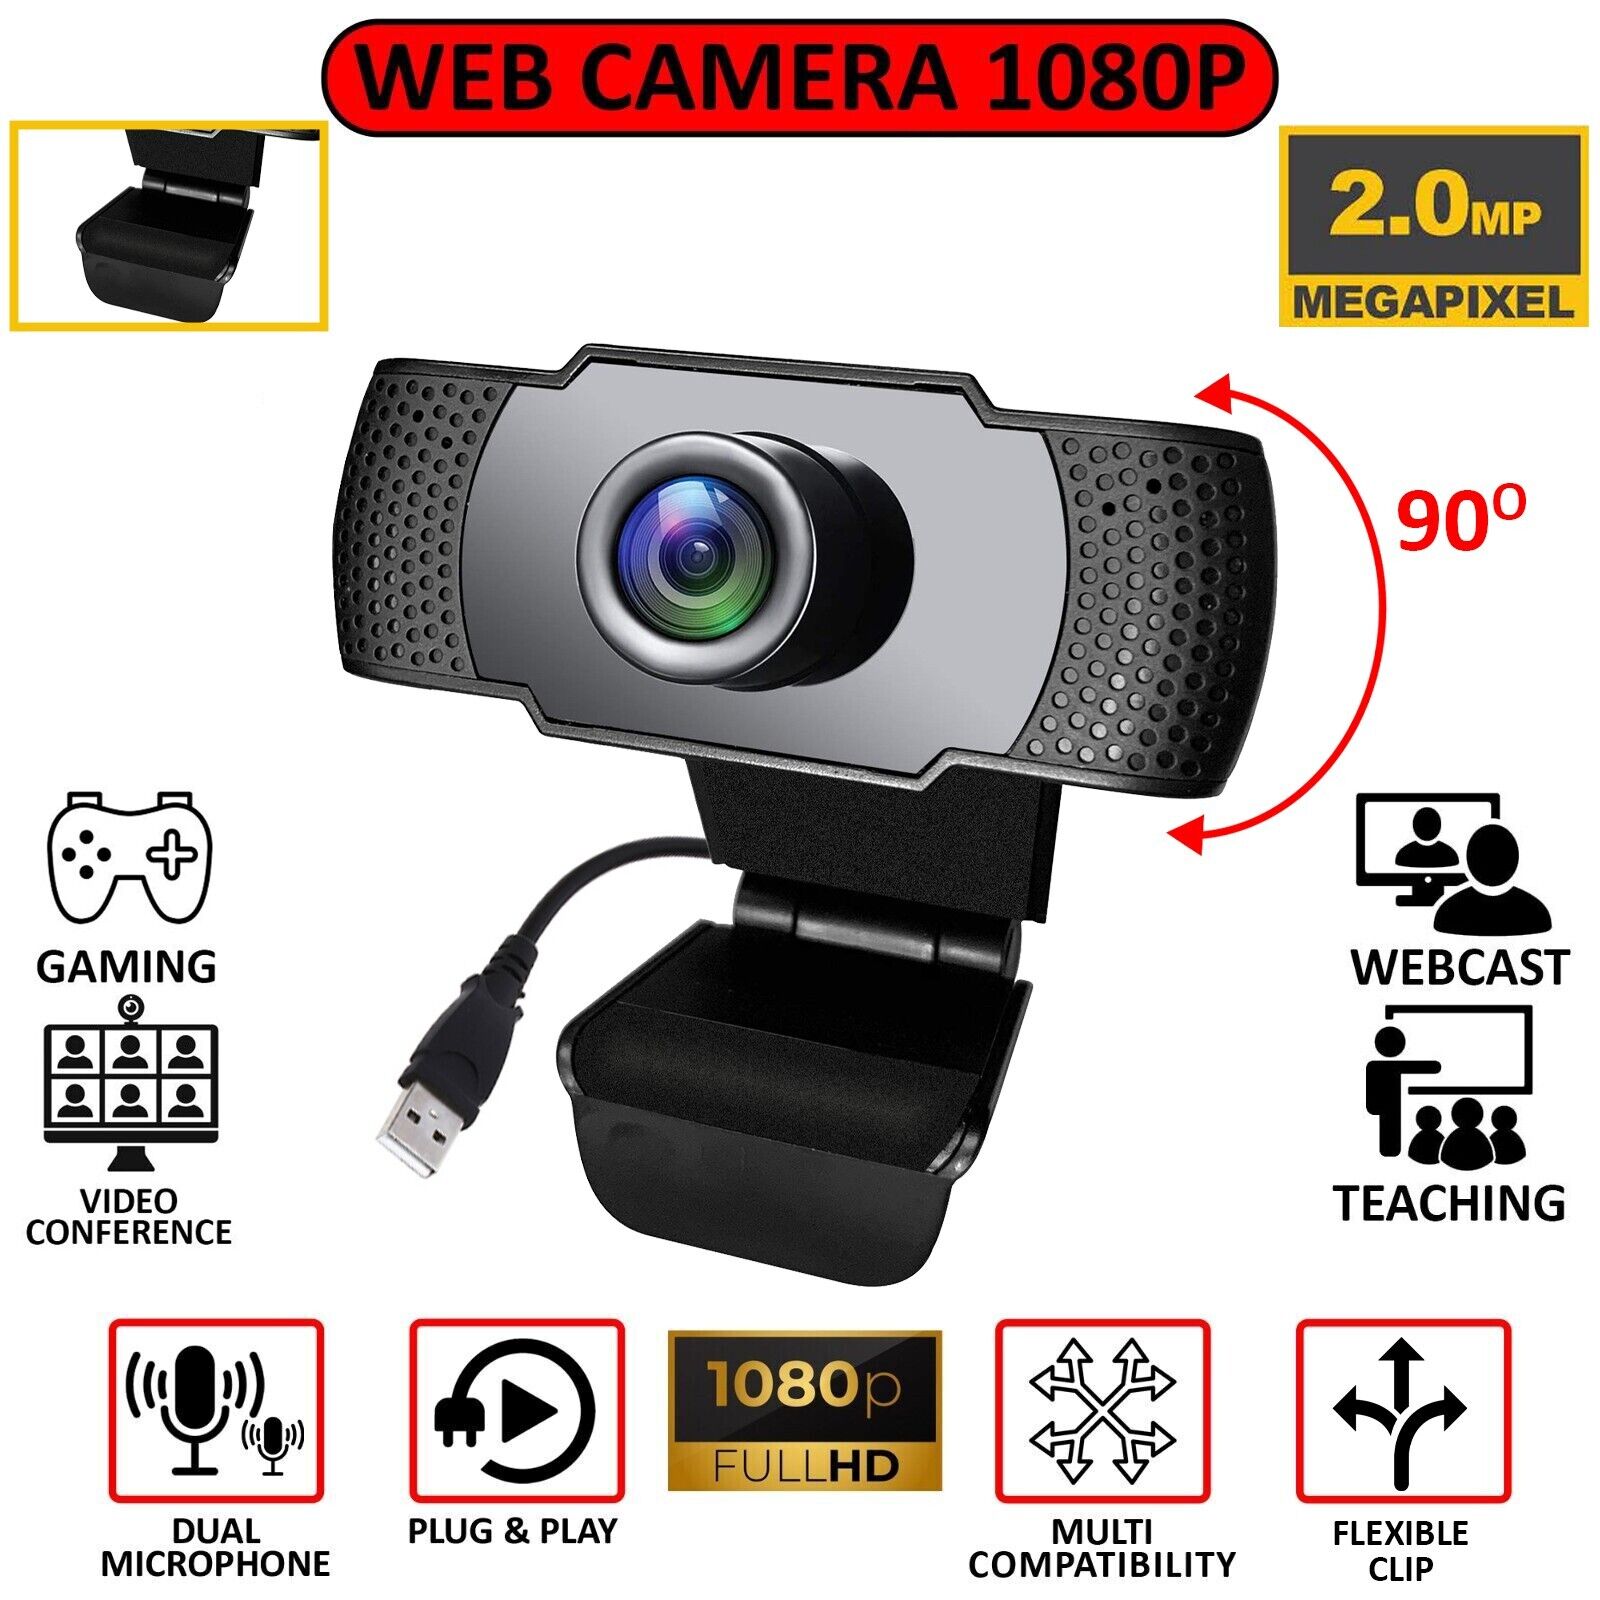 2MP Webcam Full HD 1080P for PC Desktop/Laptop Auto Focus Web Camera with MIC